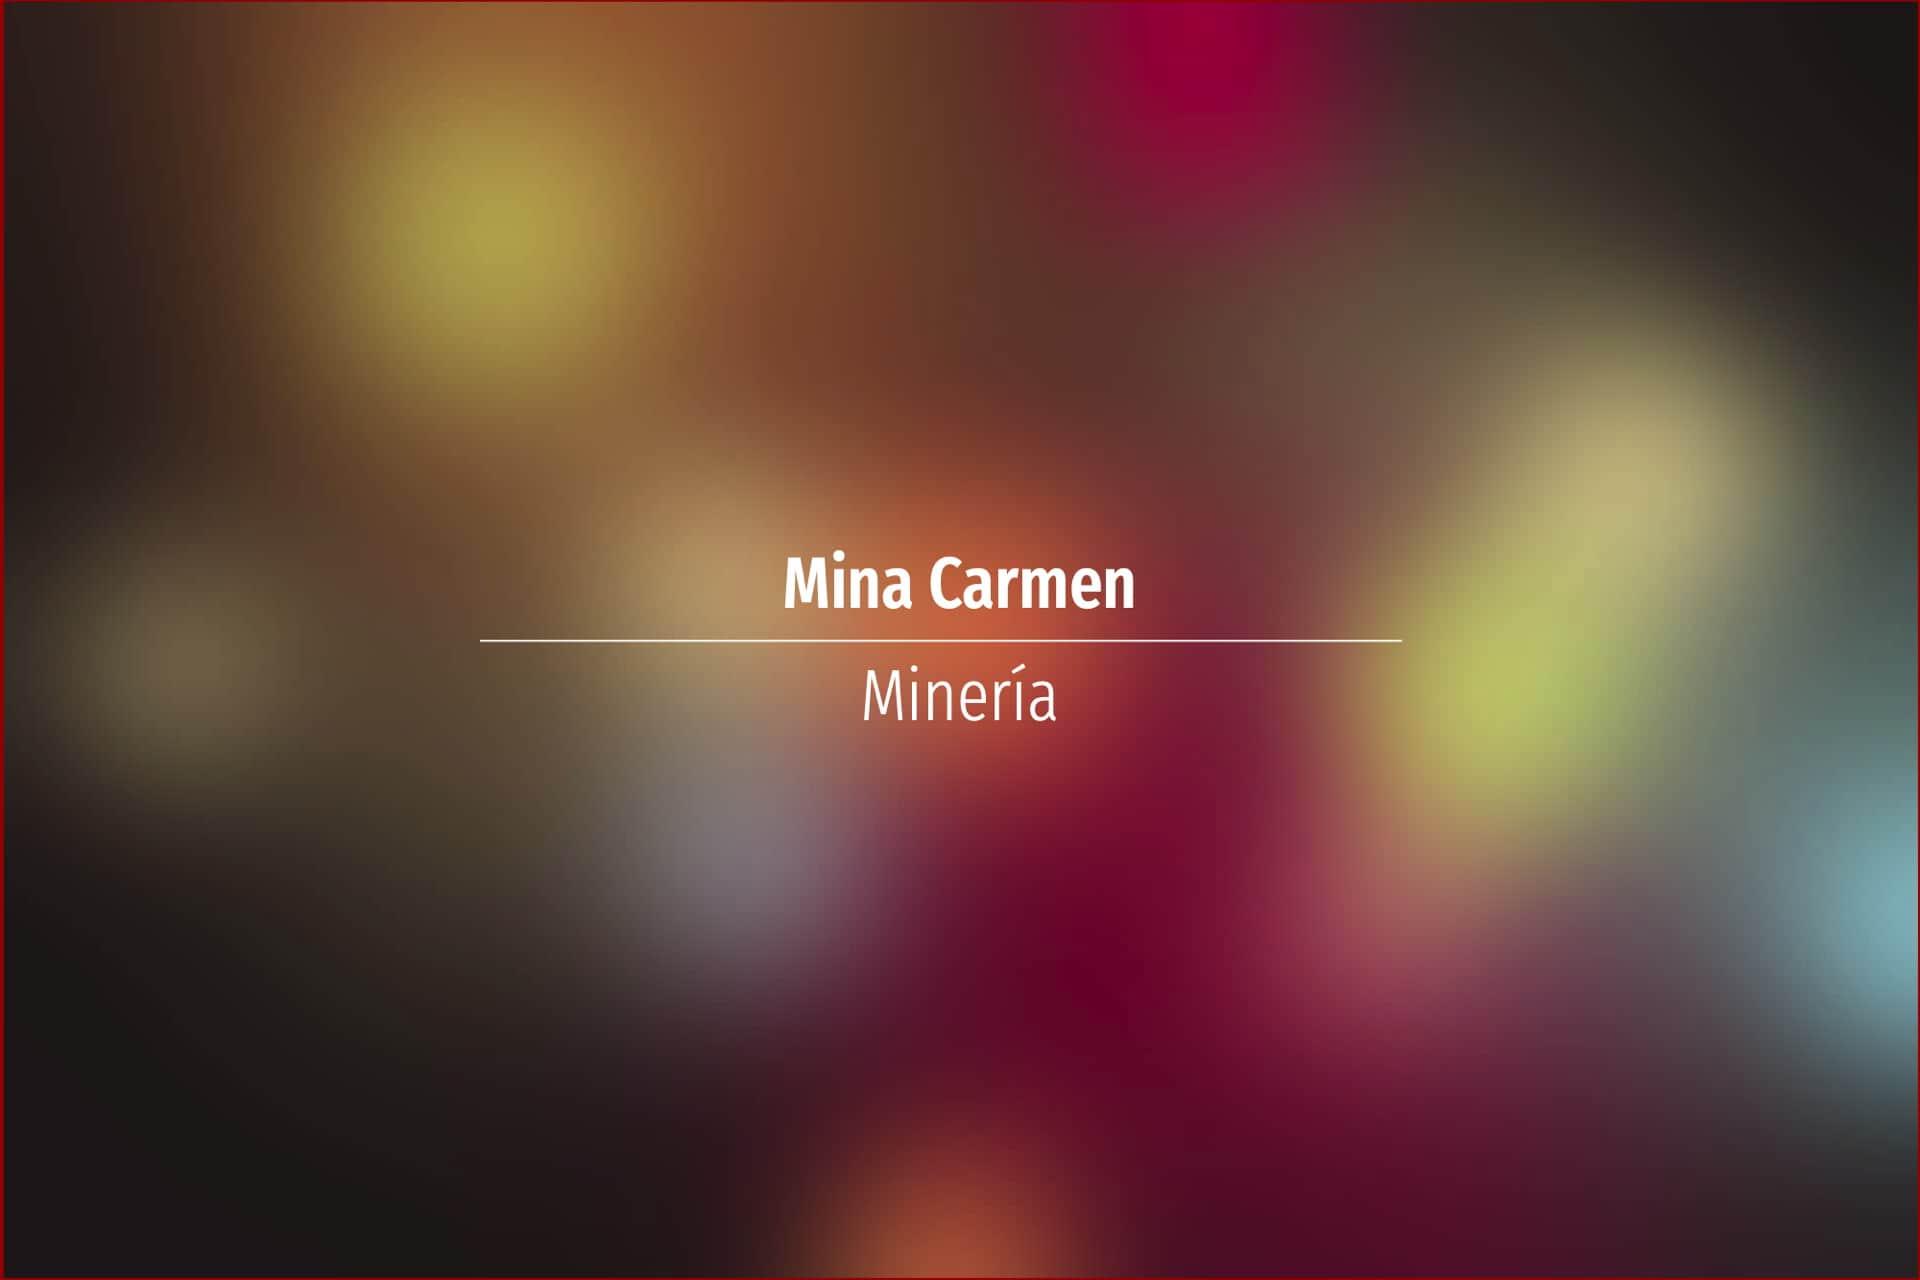 Mina Carmen